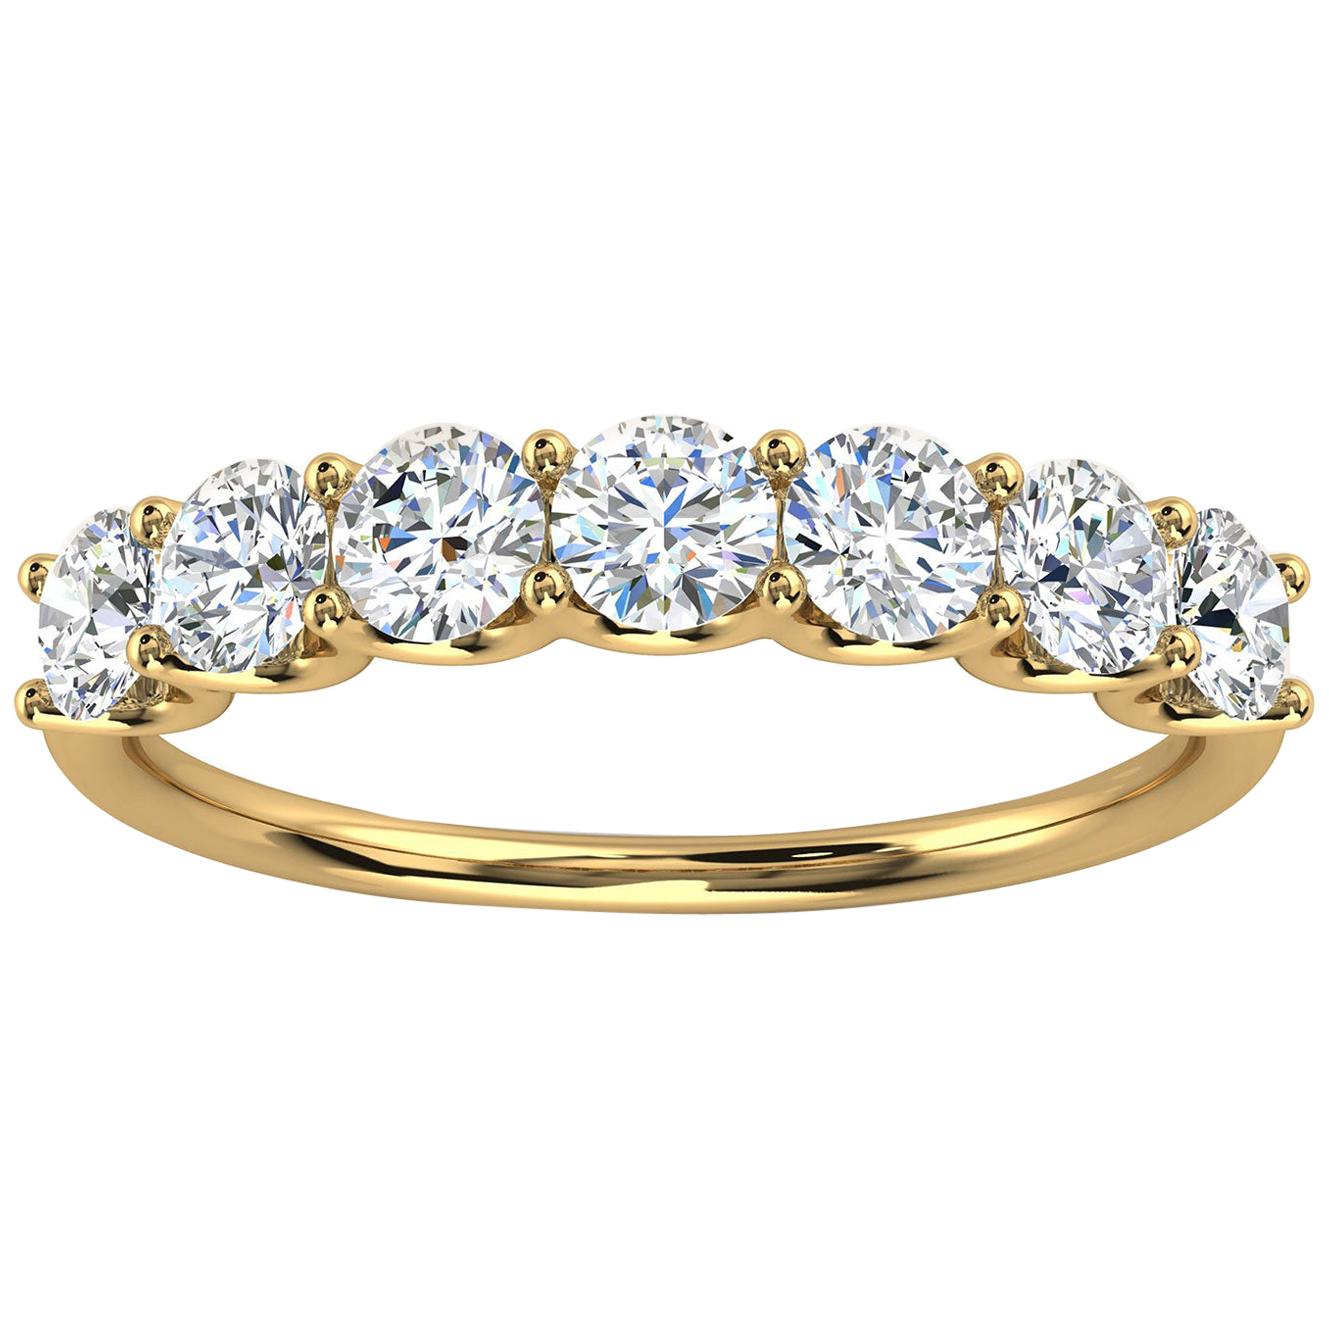 18k Yellow Gold Winter Diamond Ring '1 Ct. Tw'